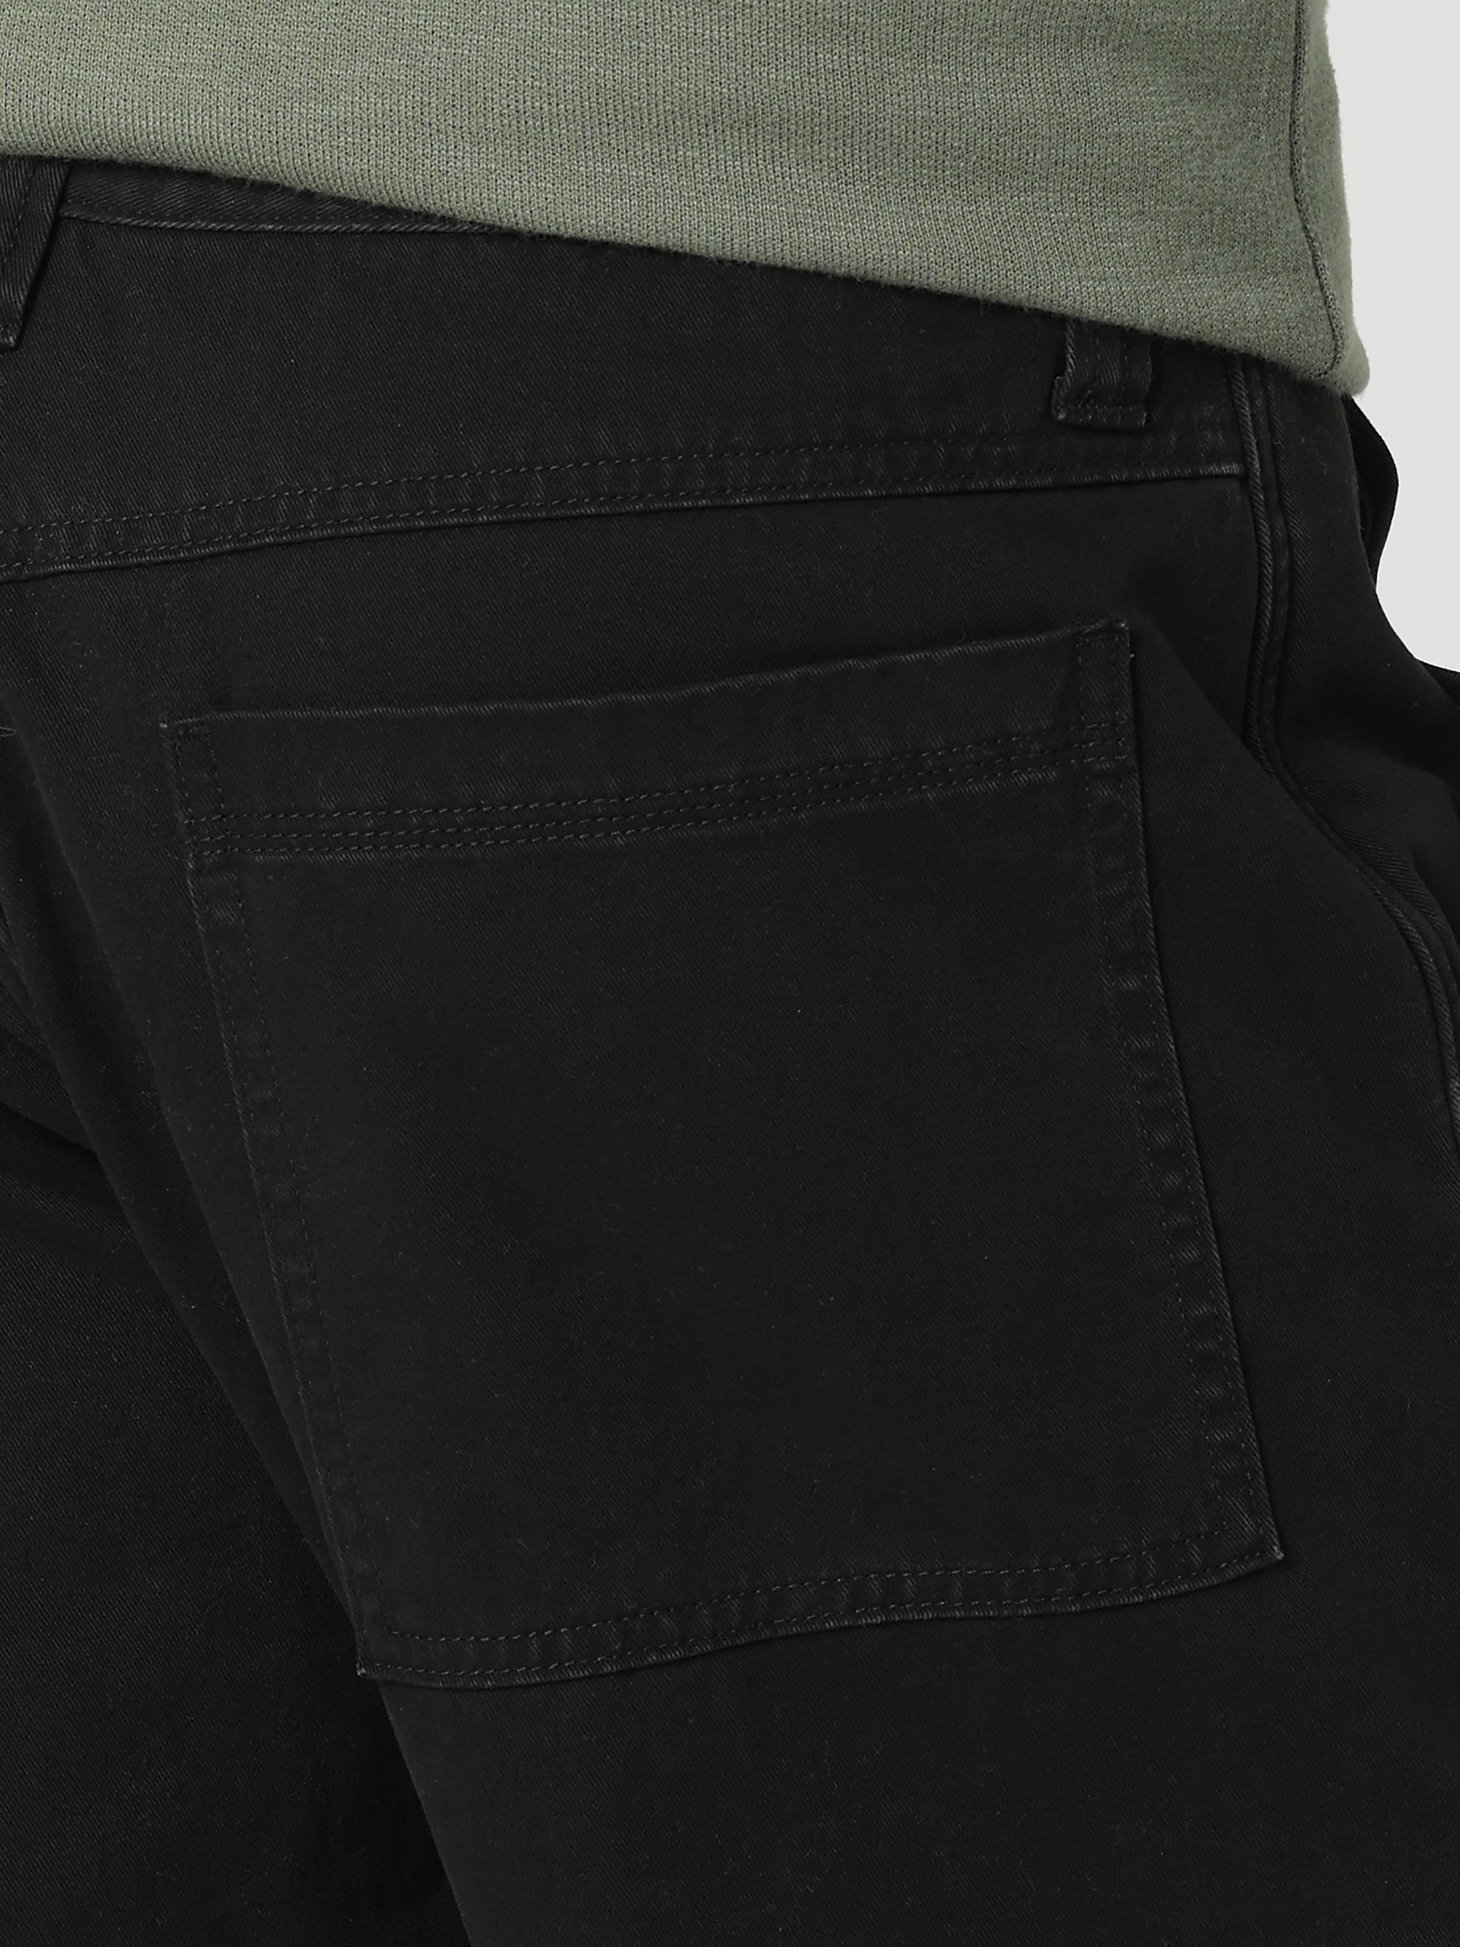 Men's Fleece Lined Cargo Pant in Black alternative view 4